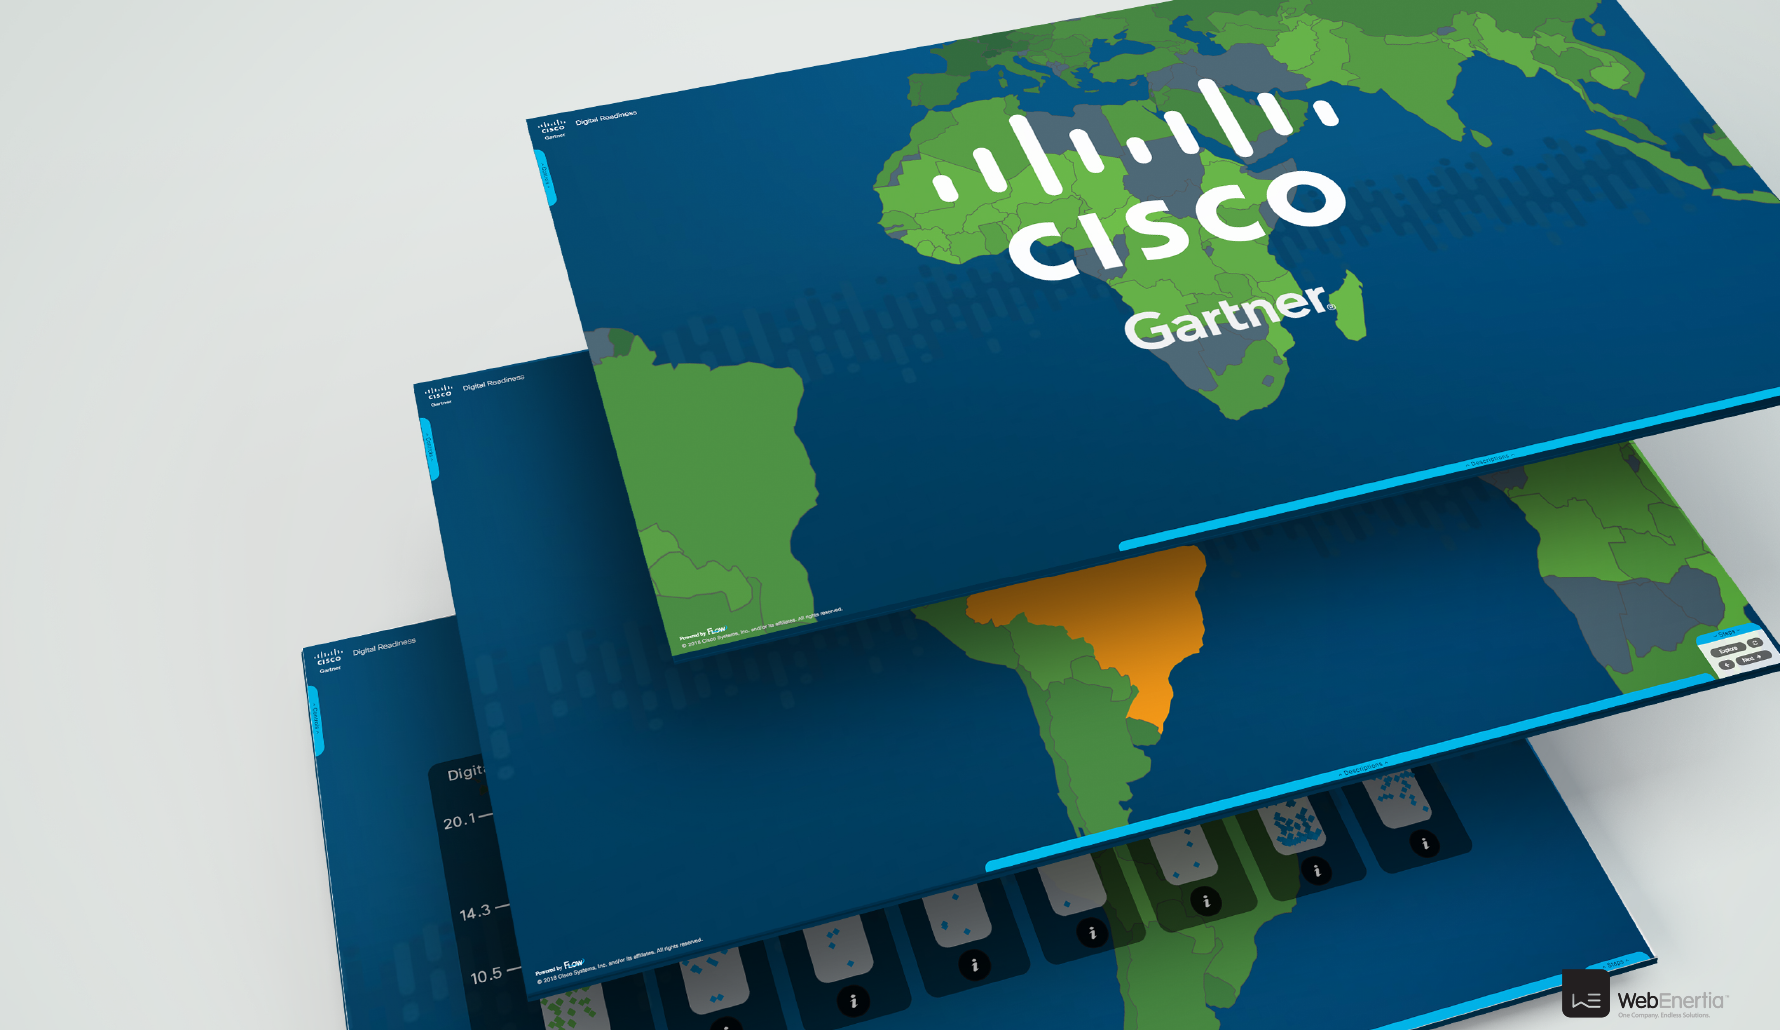 Cisco CSR and Gartner world map layers